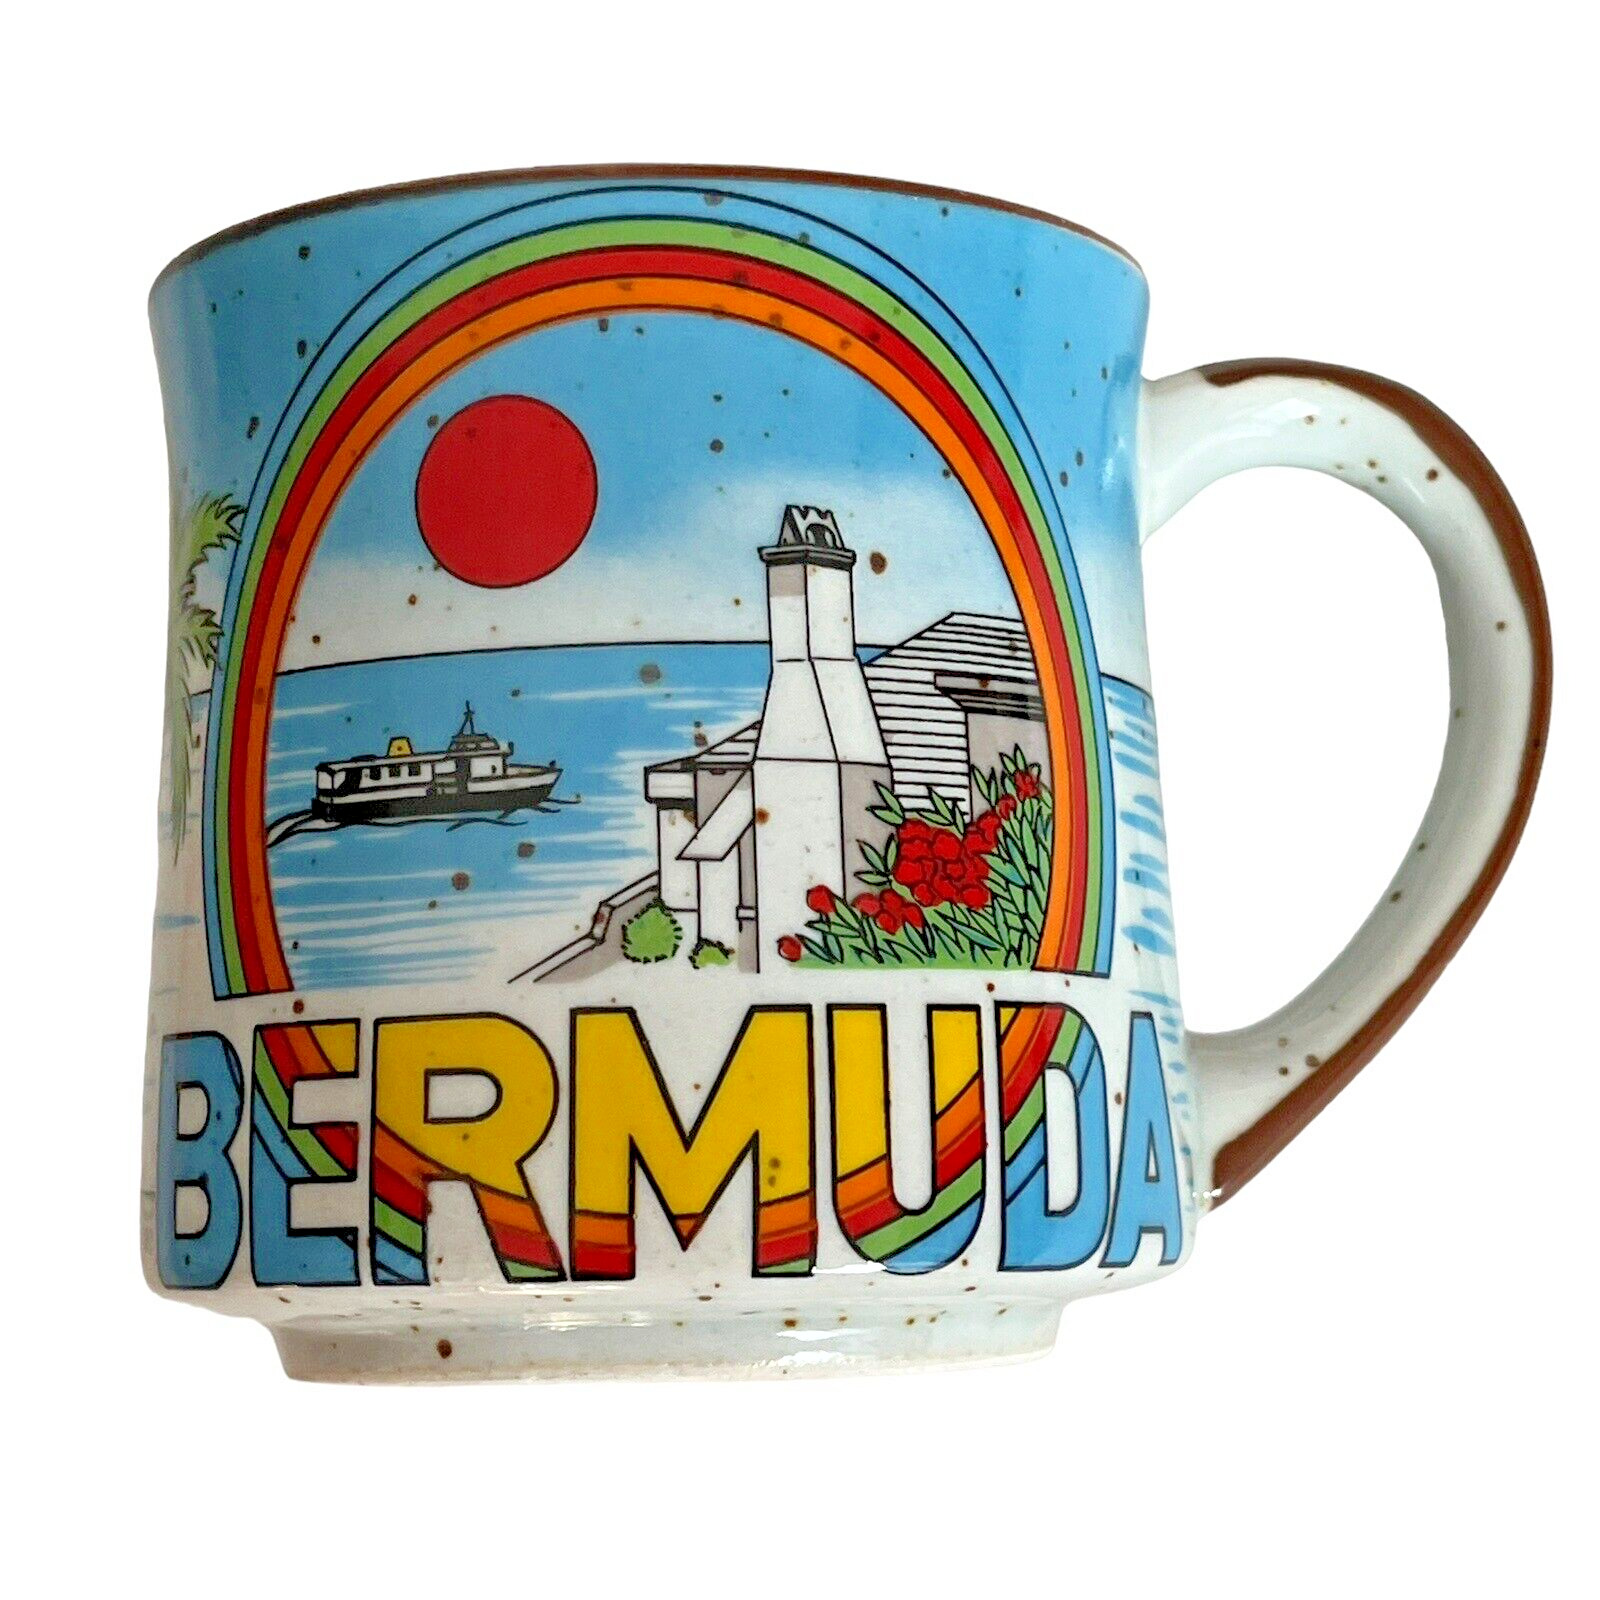 Bermuda Stoneware Vintage Sea Sunset Rainbow Beach Boat Souvenir Mug Coffee Cup